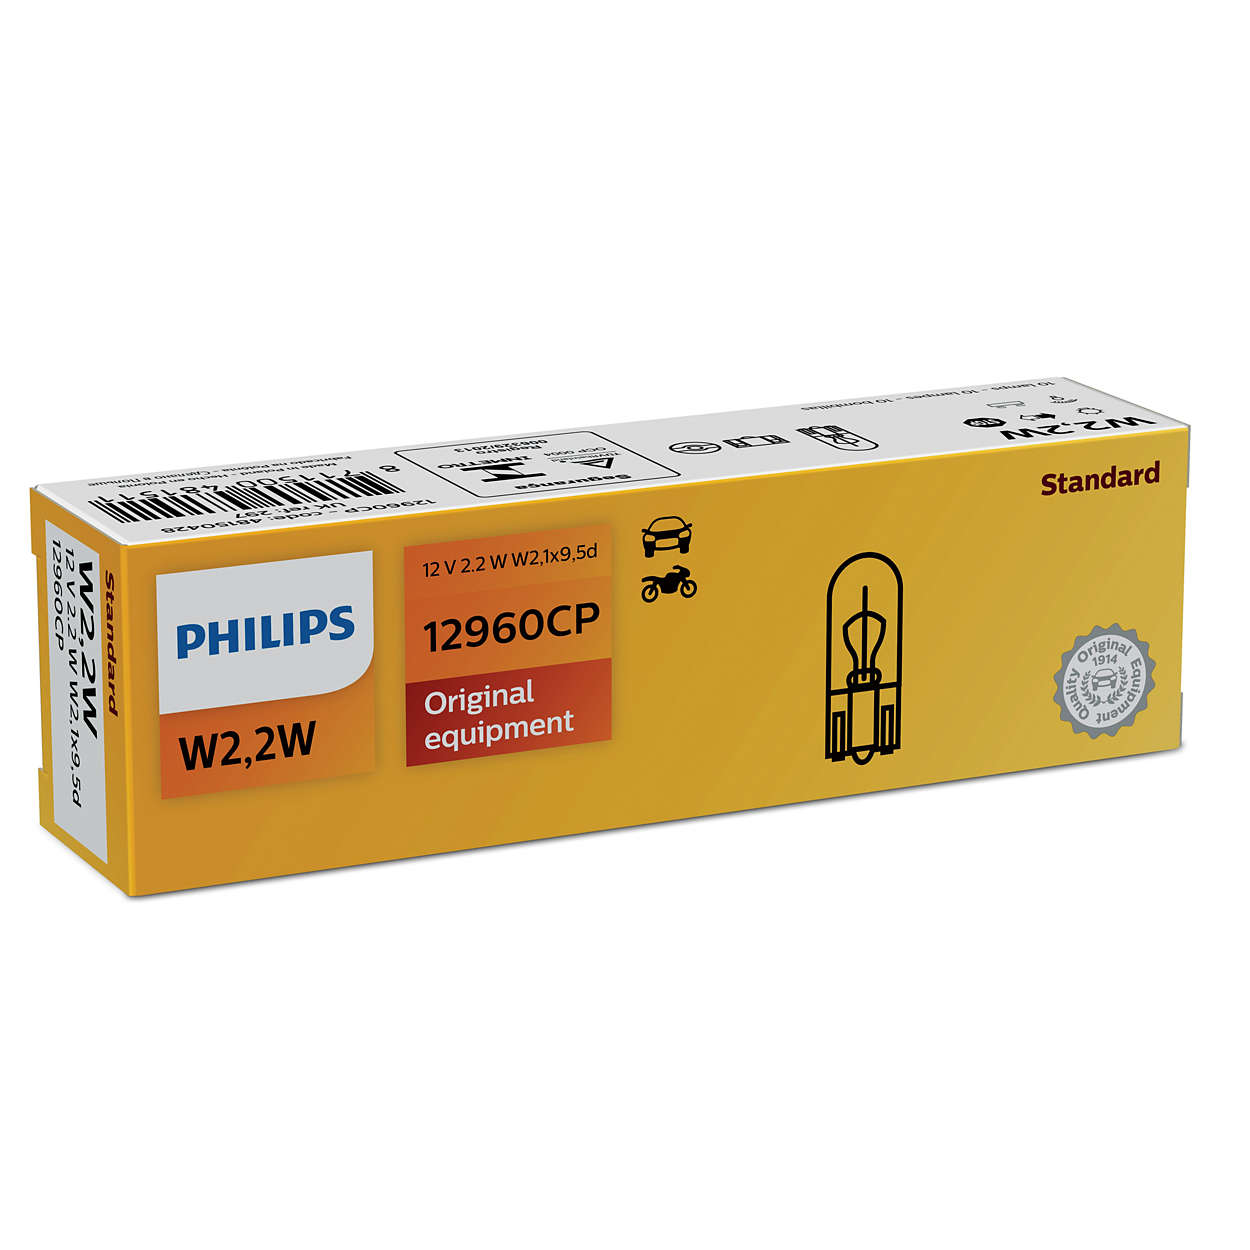 Philips W3W 12V W2,2W - (per 10 stuks)